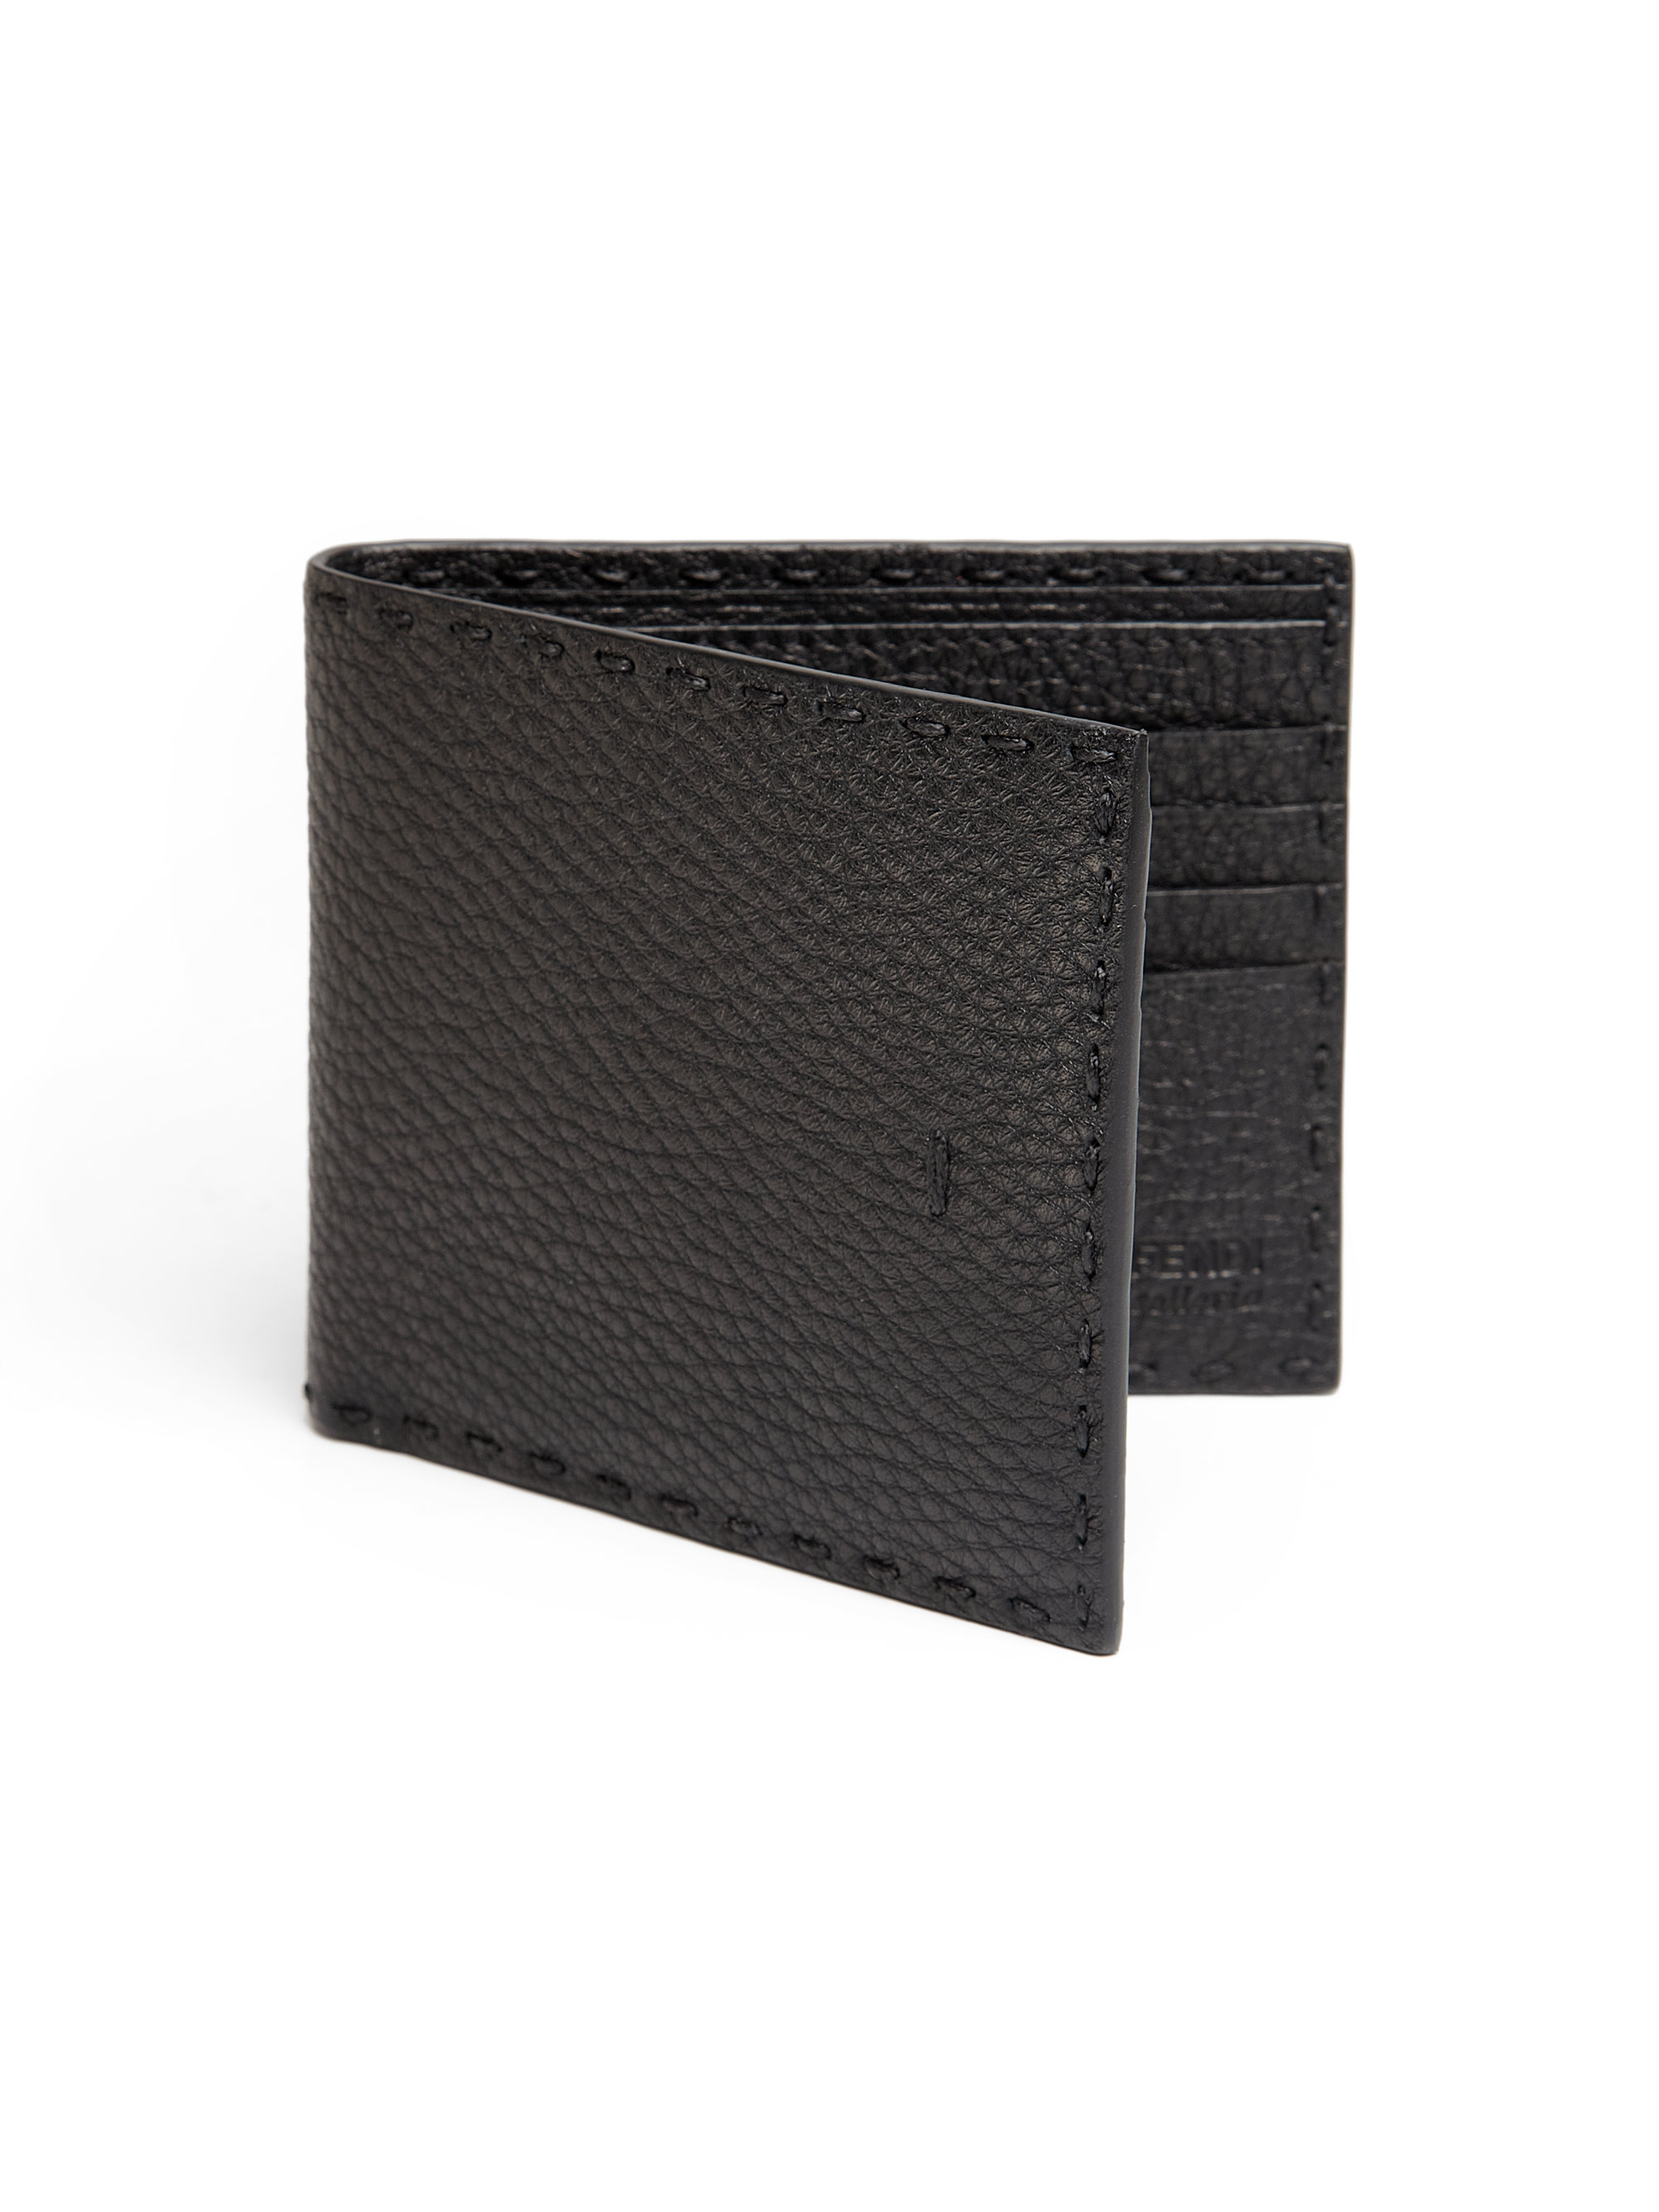 Fendi Pebbled Leather Wallet in Black for Men | Lyst